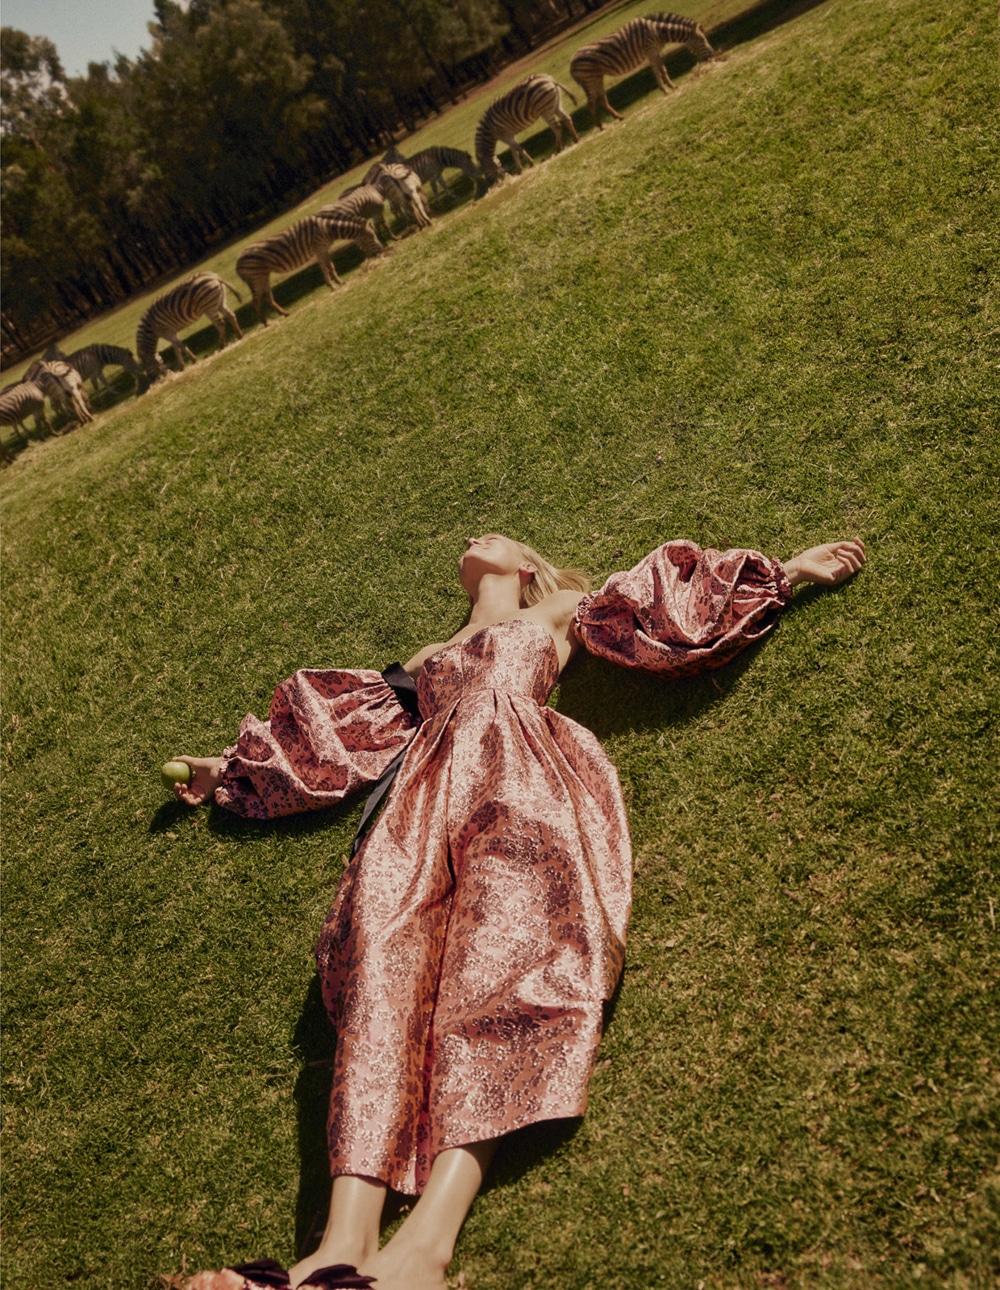 Gemma Ward covers Harper’s Bazaar Australia December 2018 by Georges Antoni